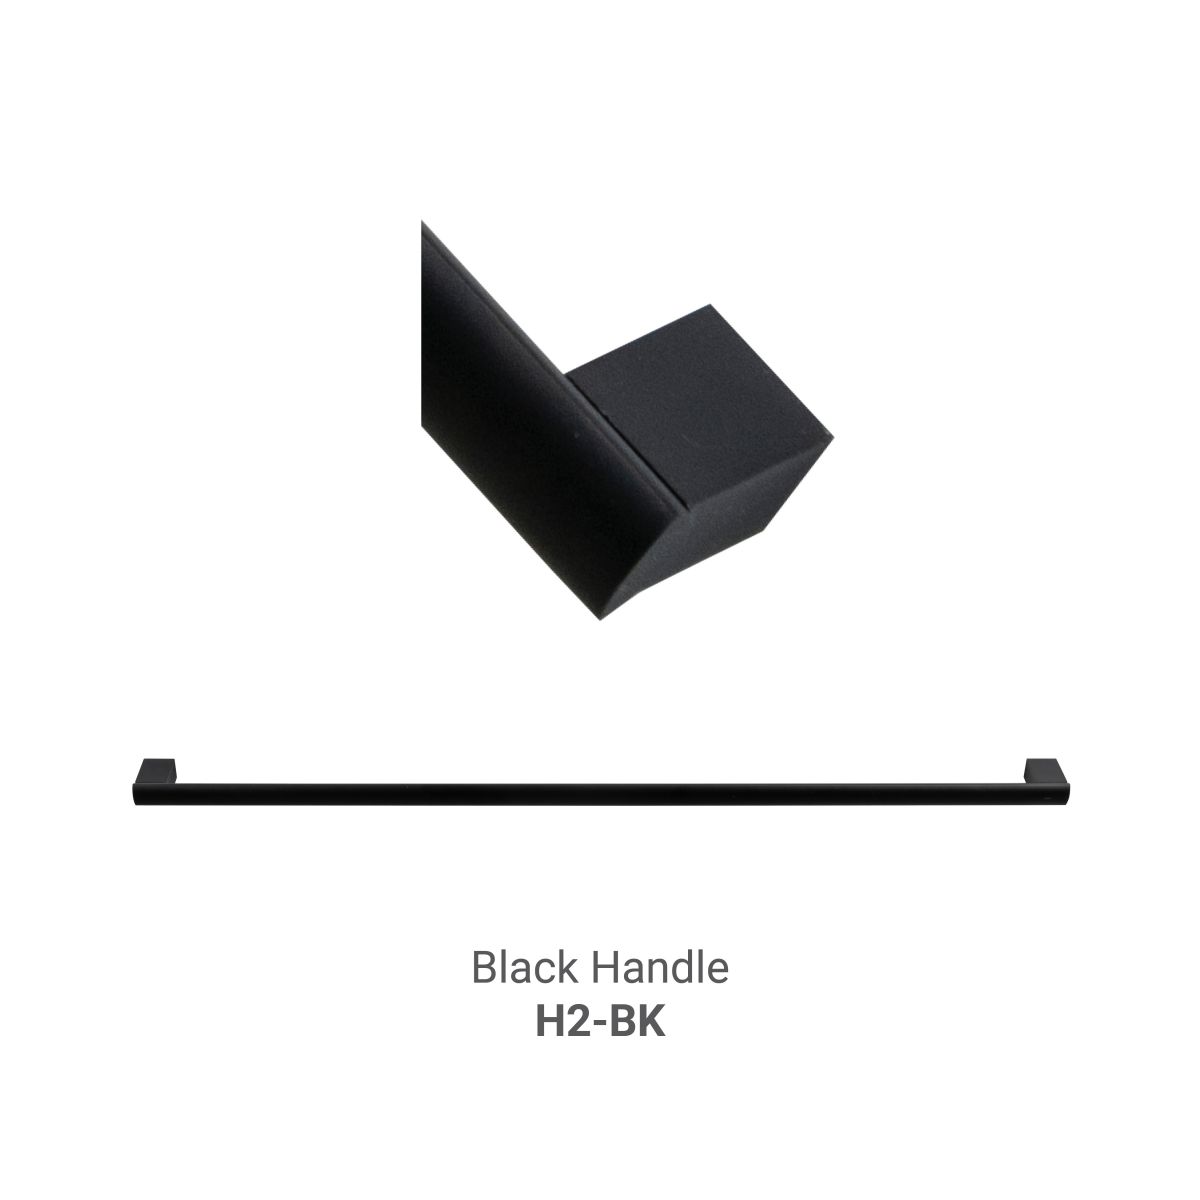 Optional: Black Handle